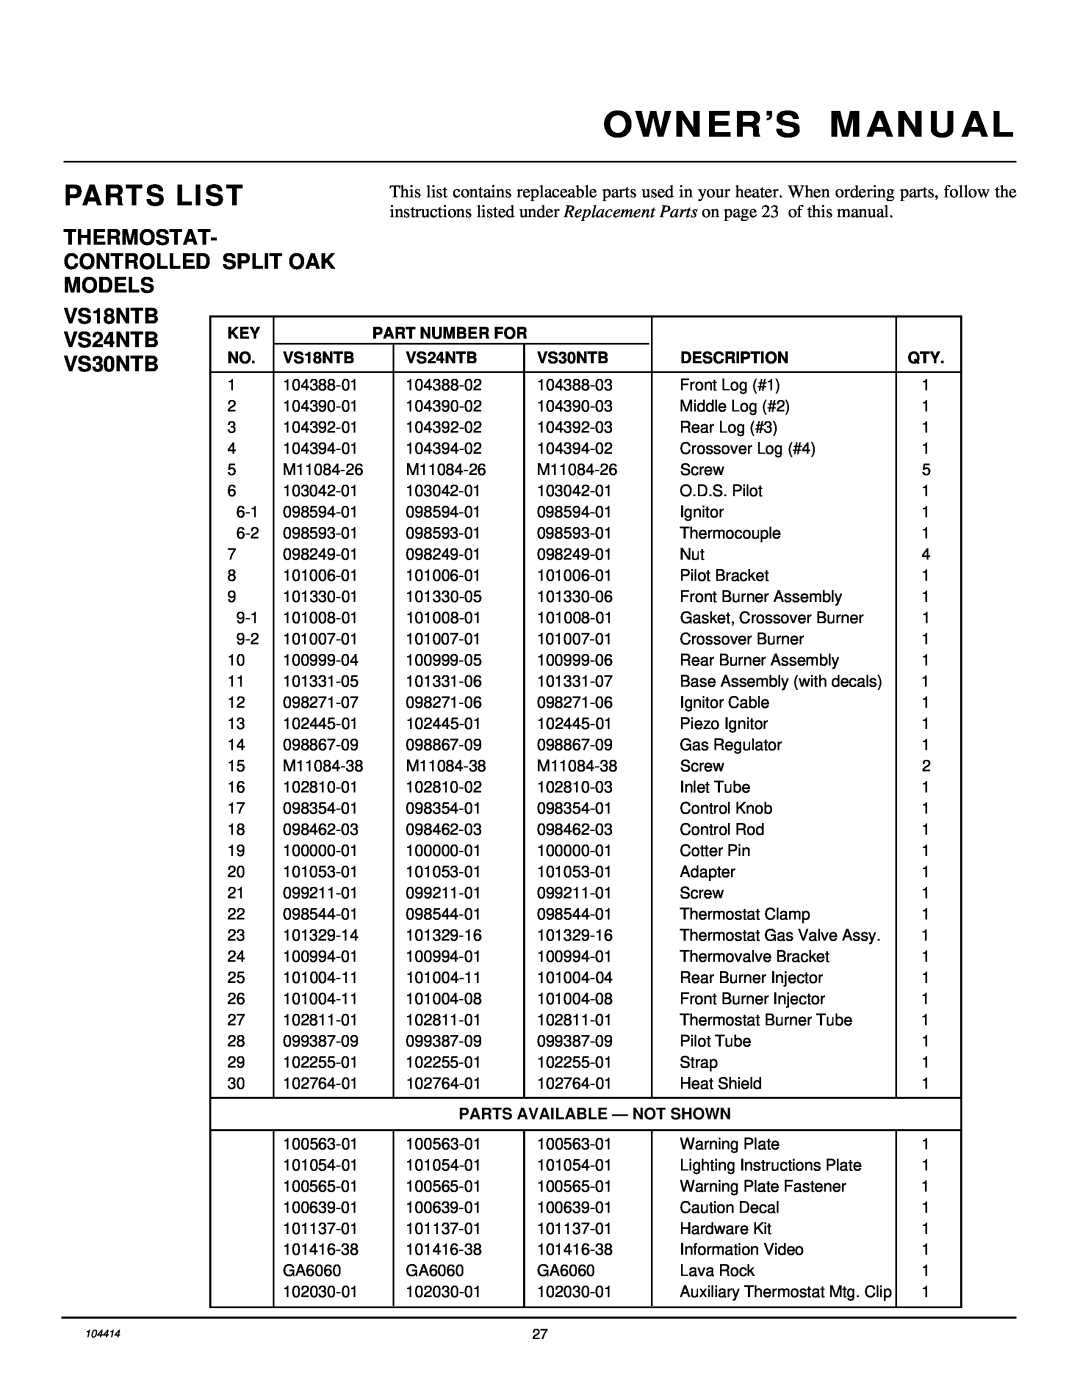 Desa CFS24NVC VS30N, B, C Thermostat- Controlled Split Oak Models, VS18NTB VS24NTB VS30NTB, Parts List, Part Number For 